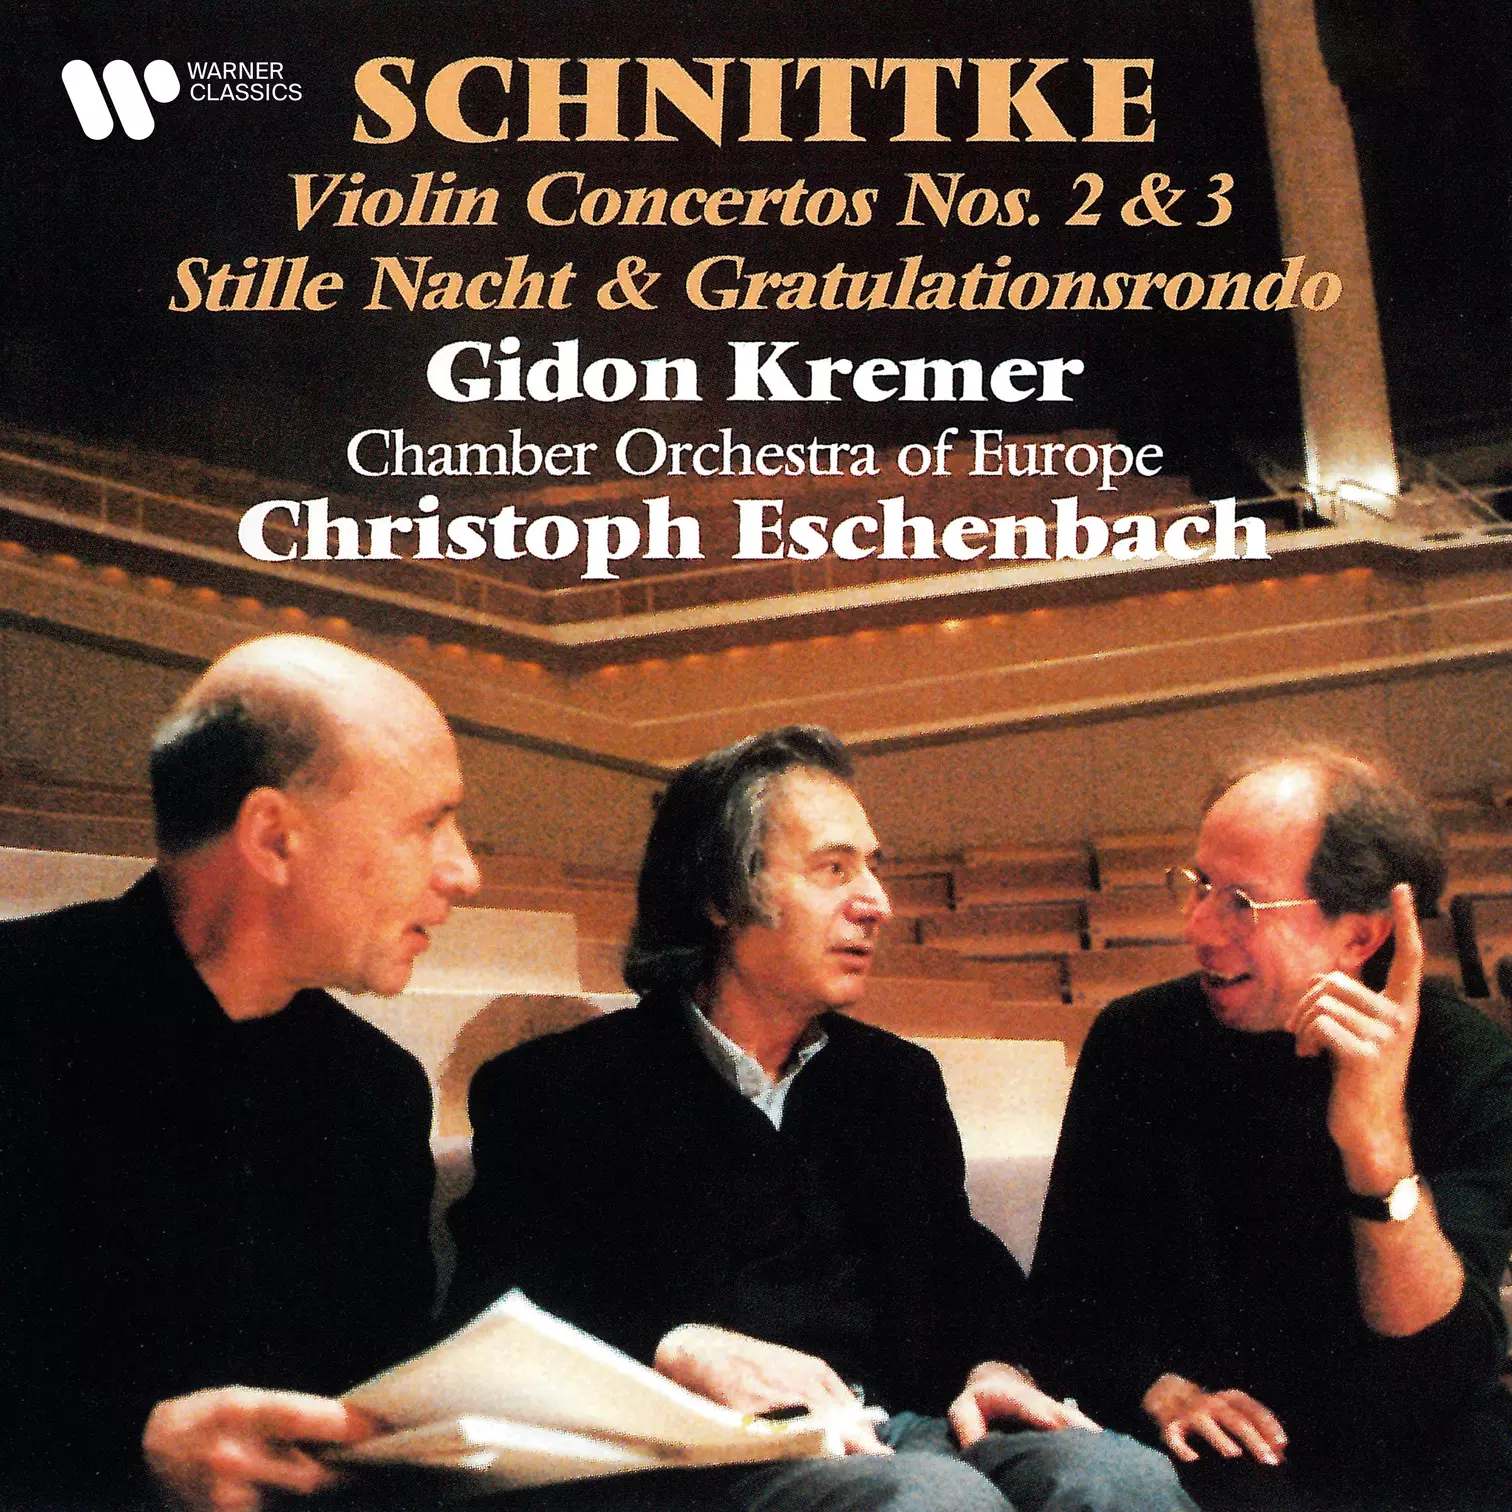 Schnittke: Violin Concertos Nos. 2 & 3, Stille Nacht & Gradulationsrondo